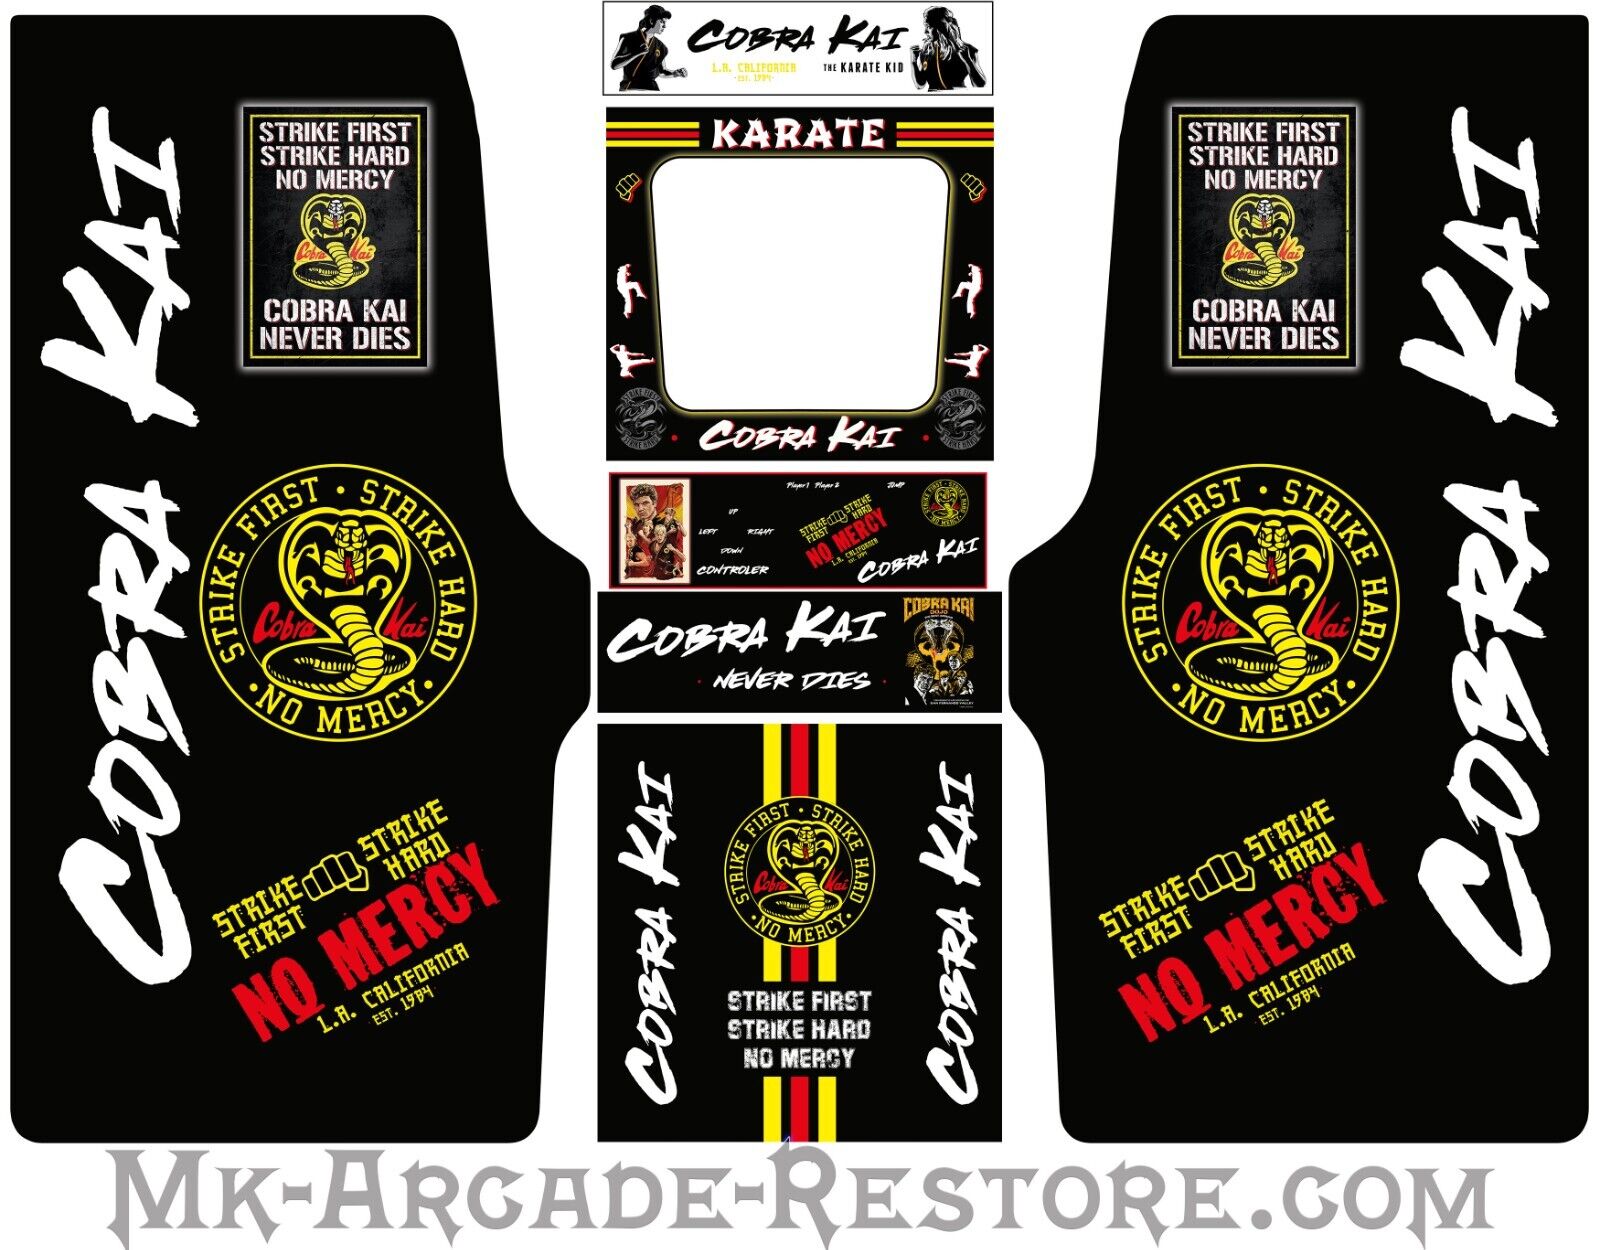 Cobra Kai Dk Cab Side Art Arcade Cabinet kit Artwork Graphics Decals Print